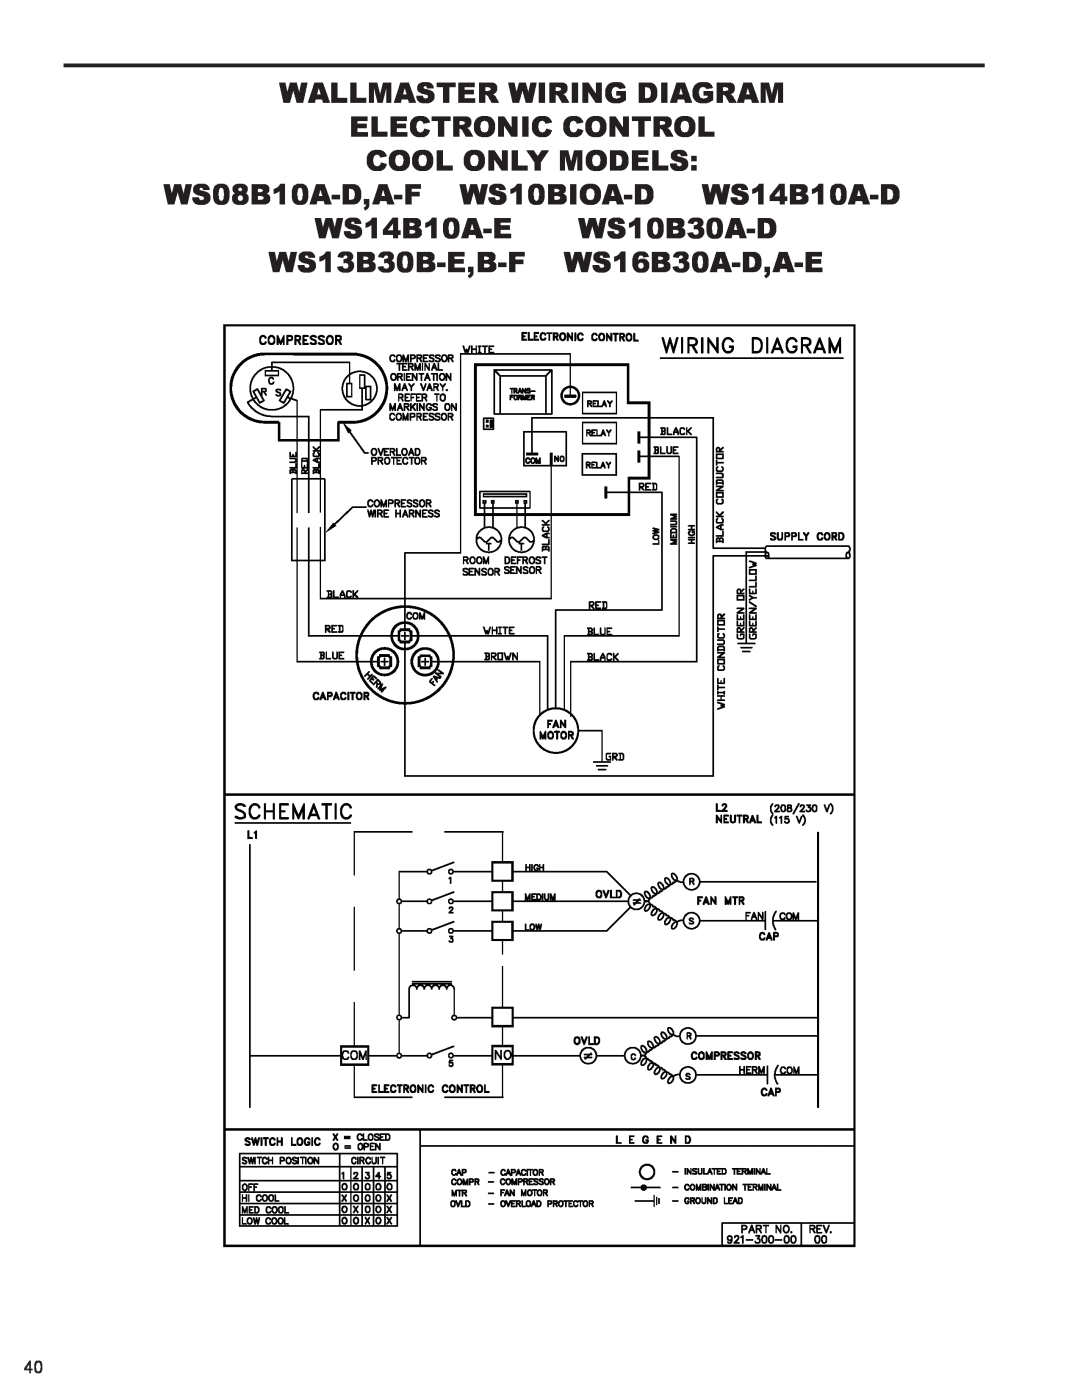 Friedrich 2008, 2009 Wallmaster Wiring Diagram Electronic Control, Cool Only Models, WS08B10A-D,A-F WS10BIOA-D WS14B10A-D 